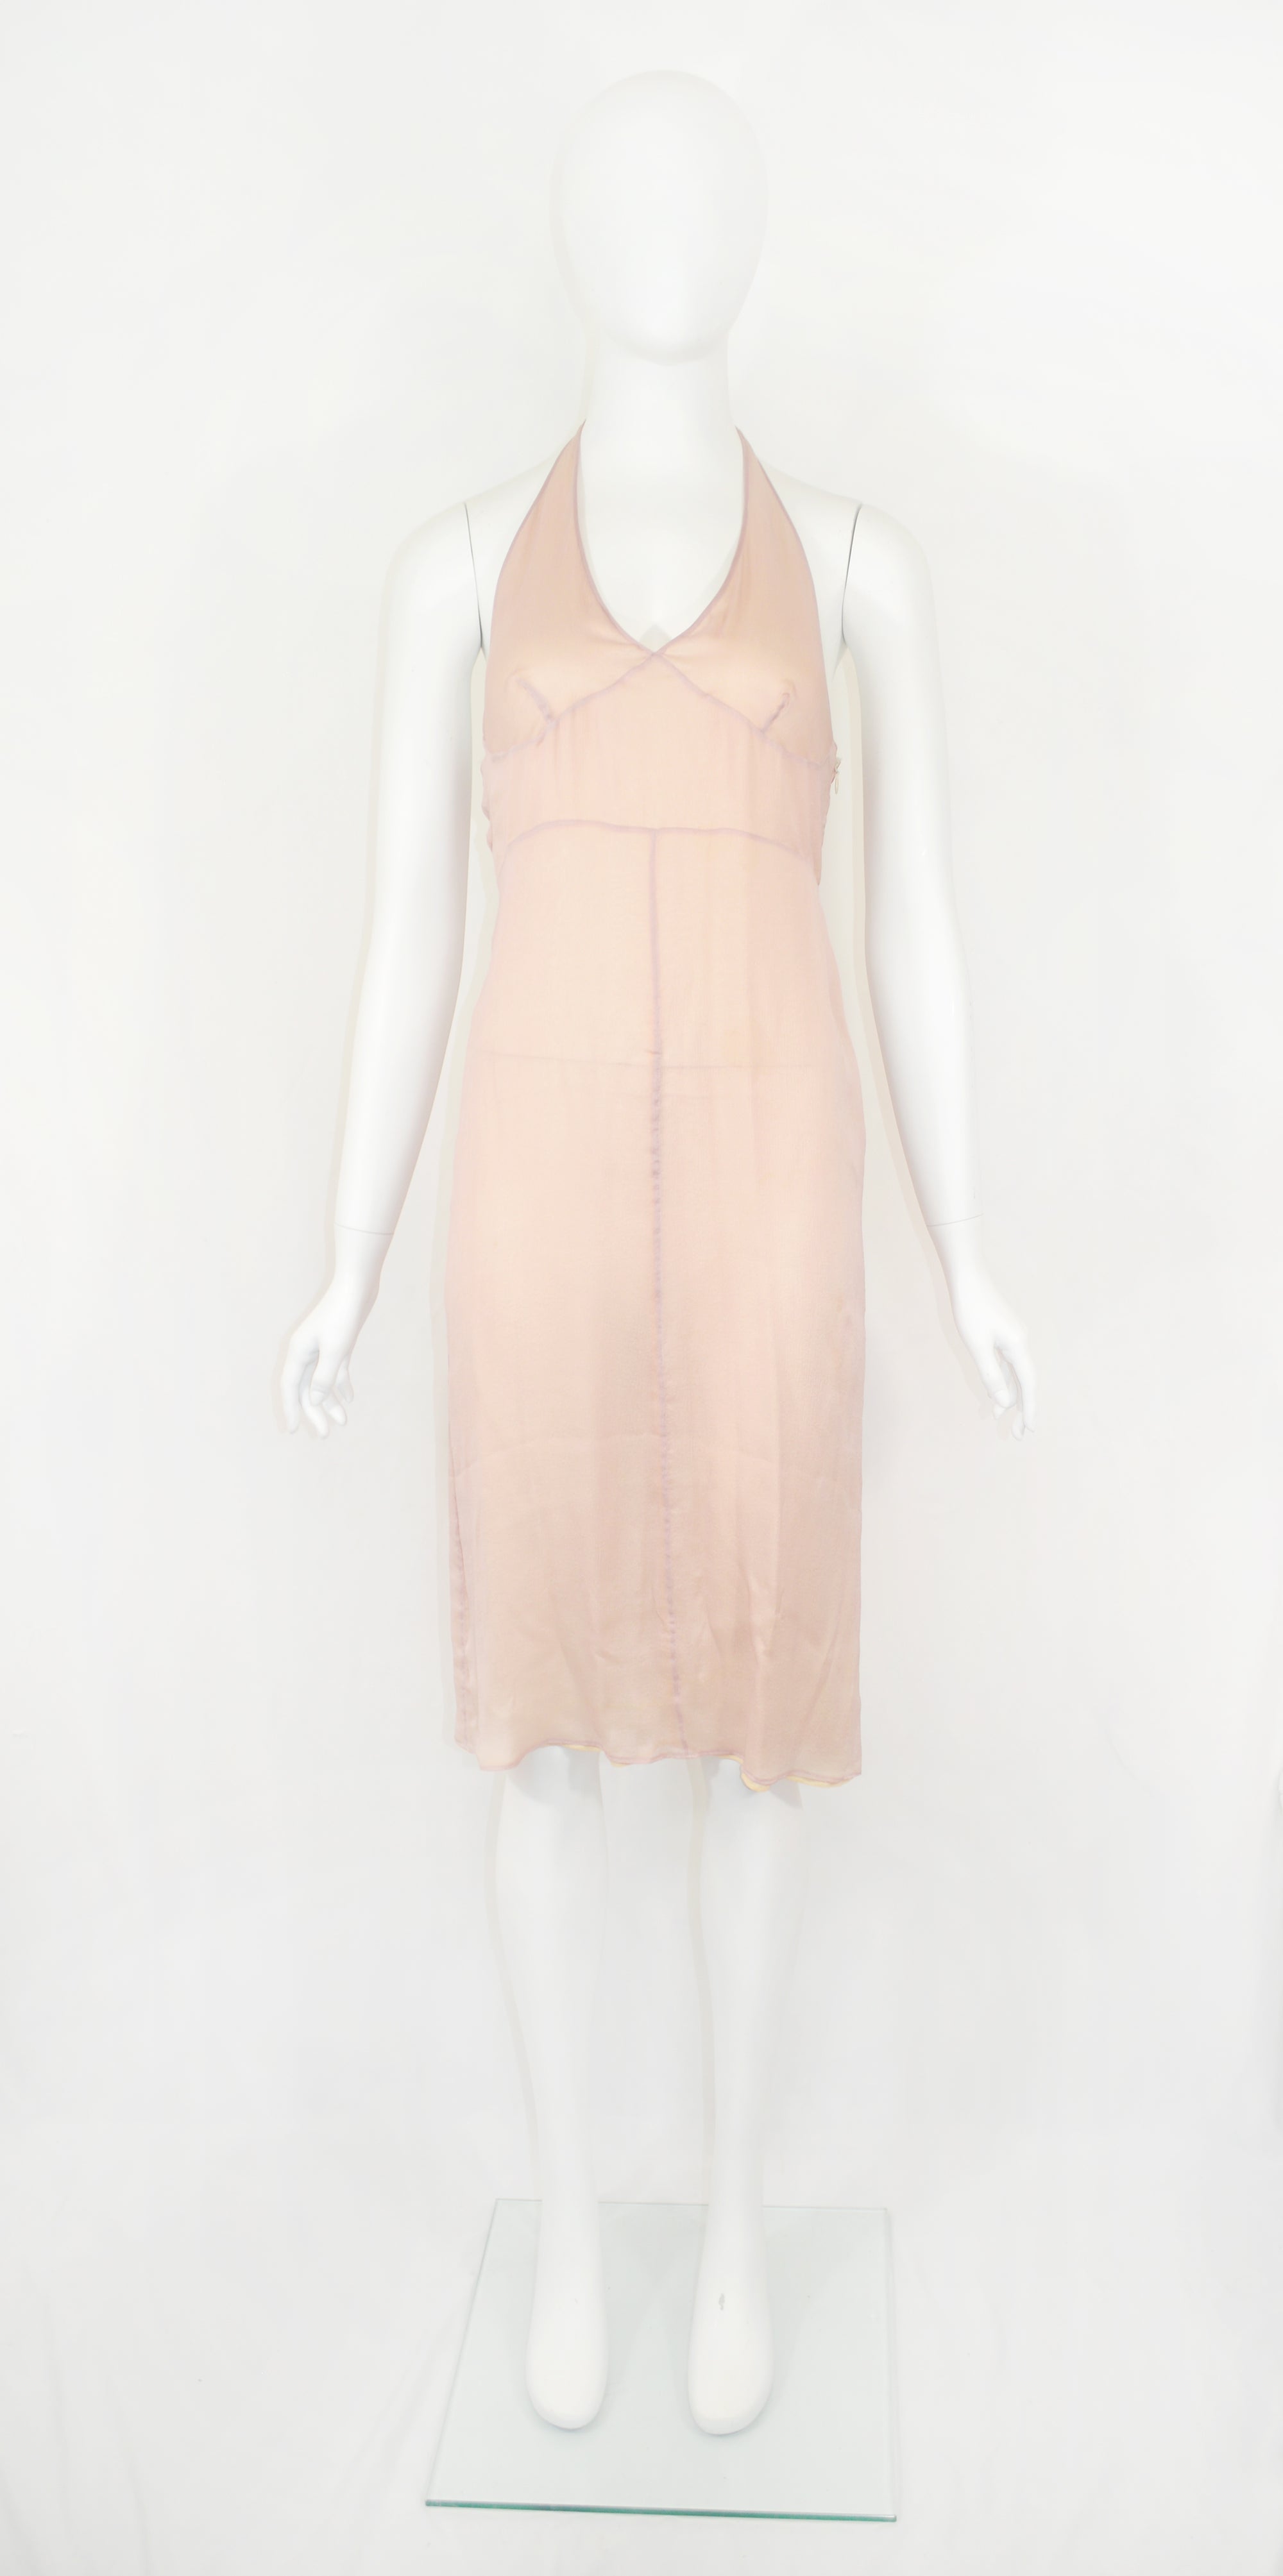 Prada SS 1995 Silk Chiffon Dress